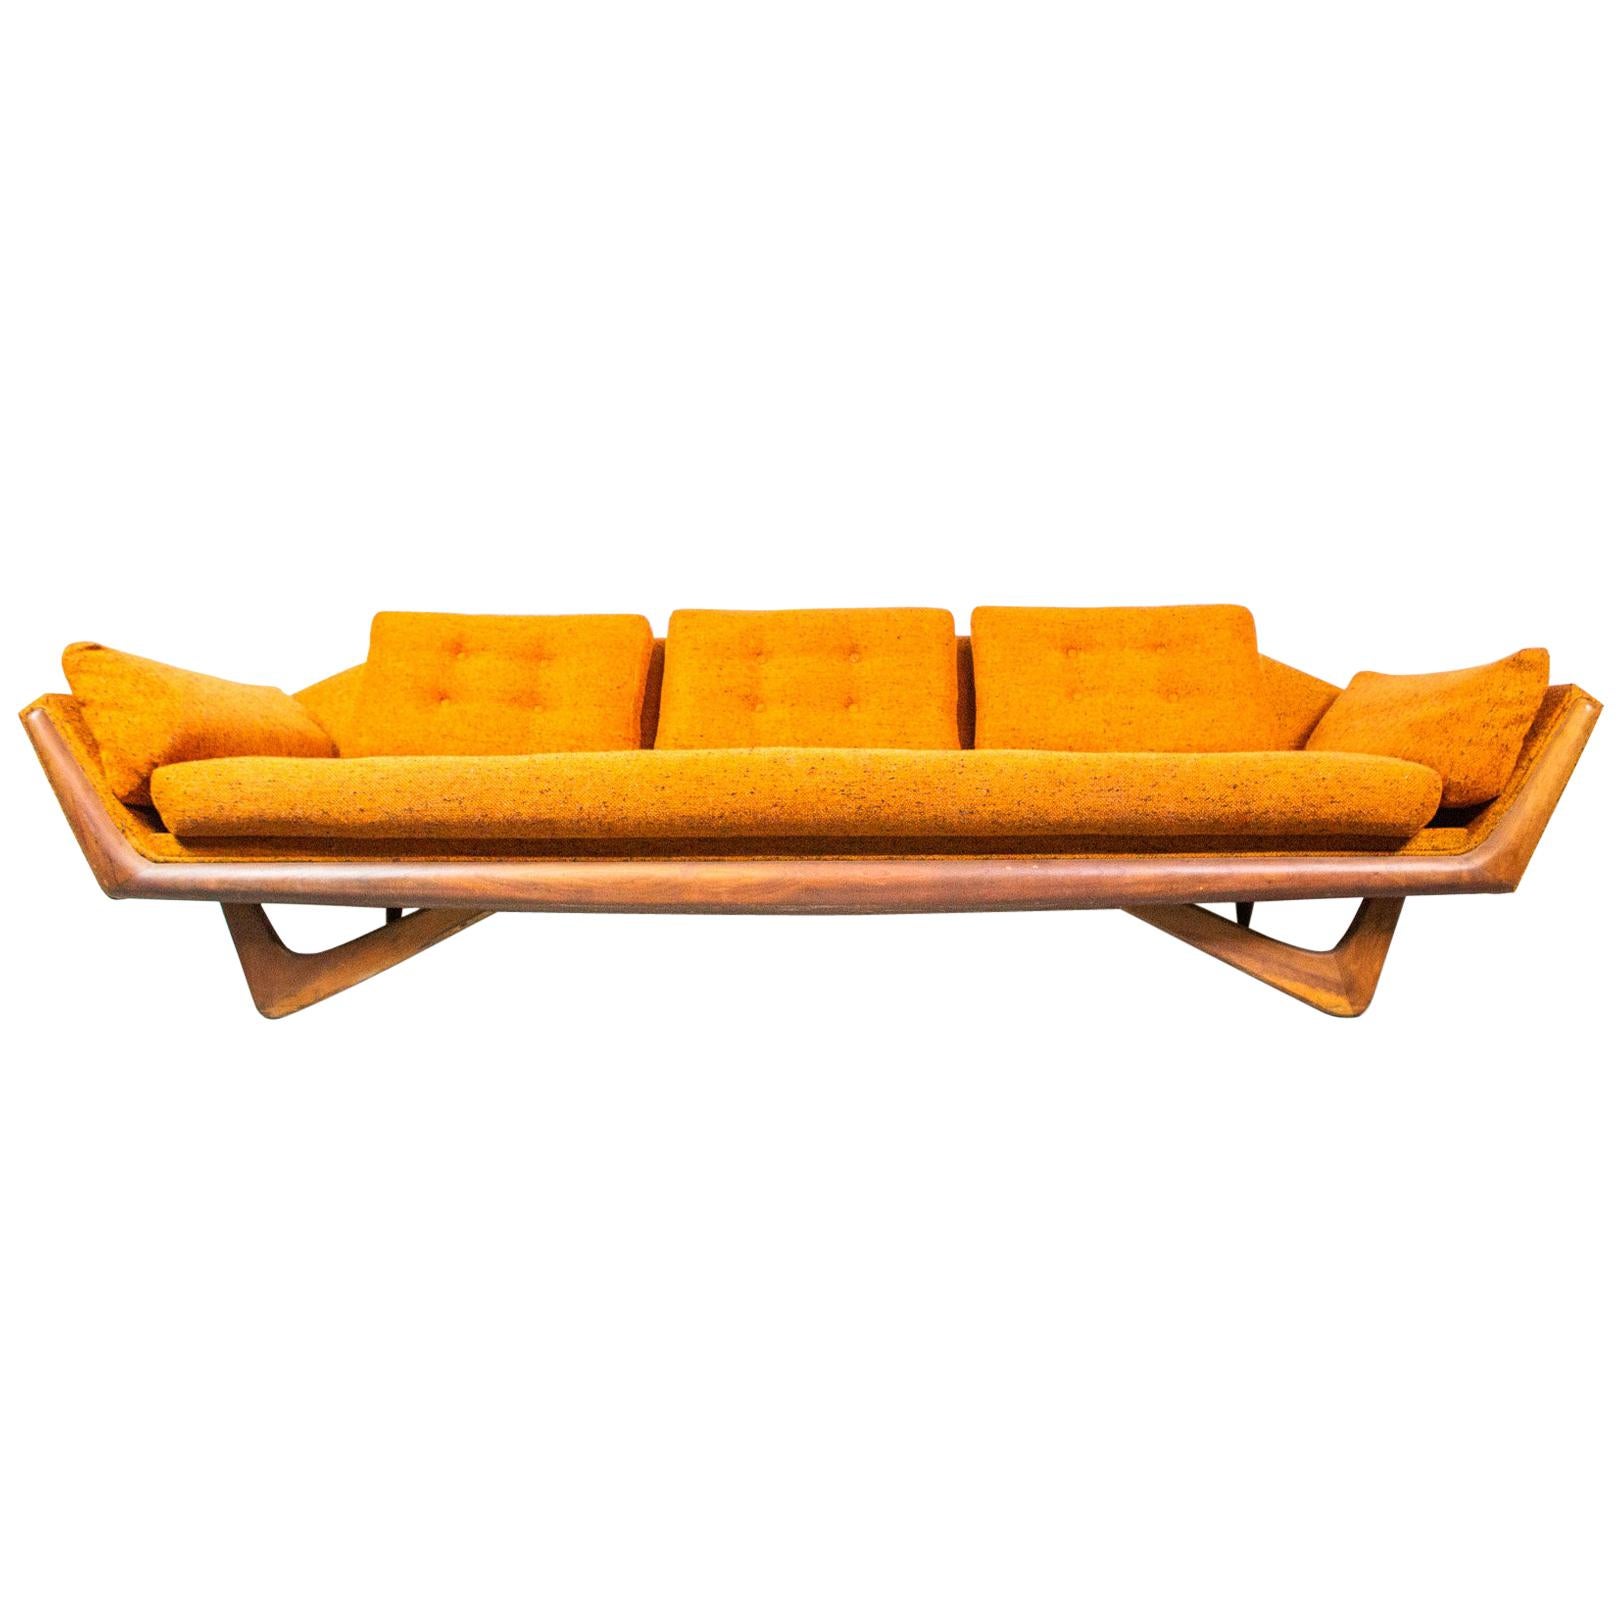 "Gondola" Sofa by Adrian Pearsall for Craft Associates